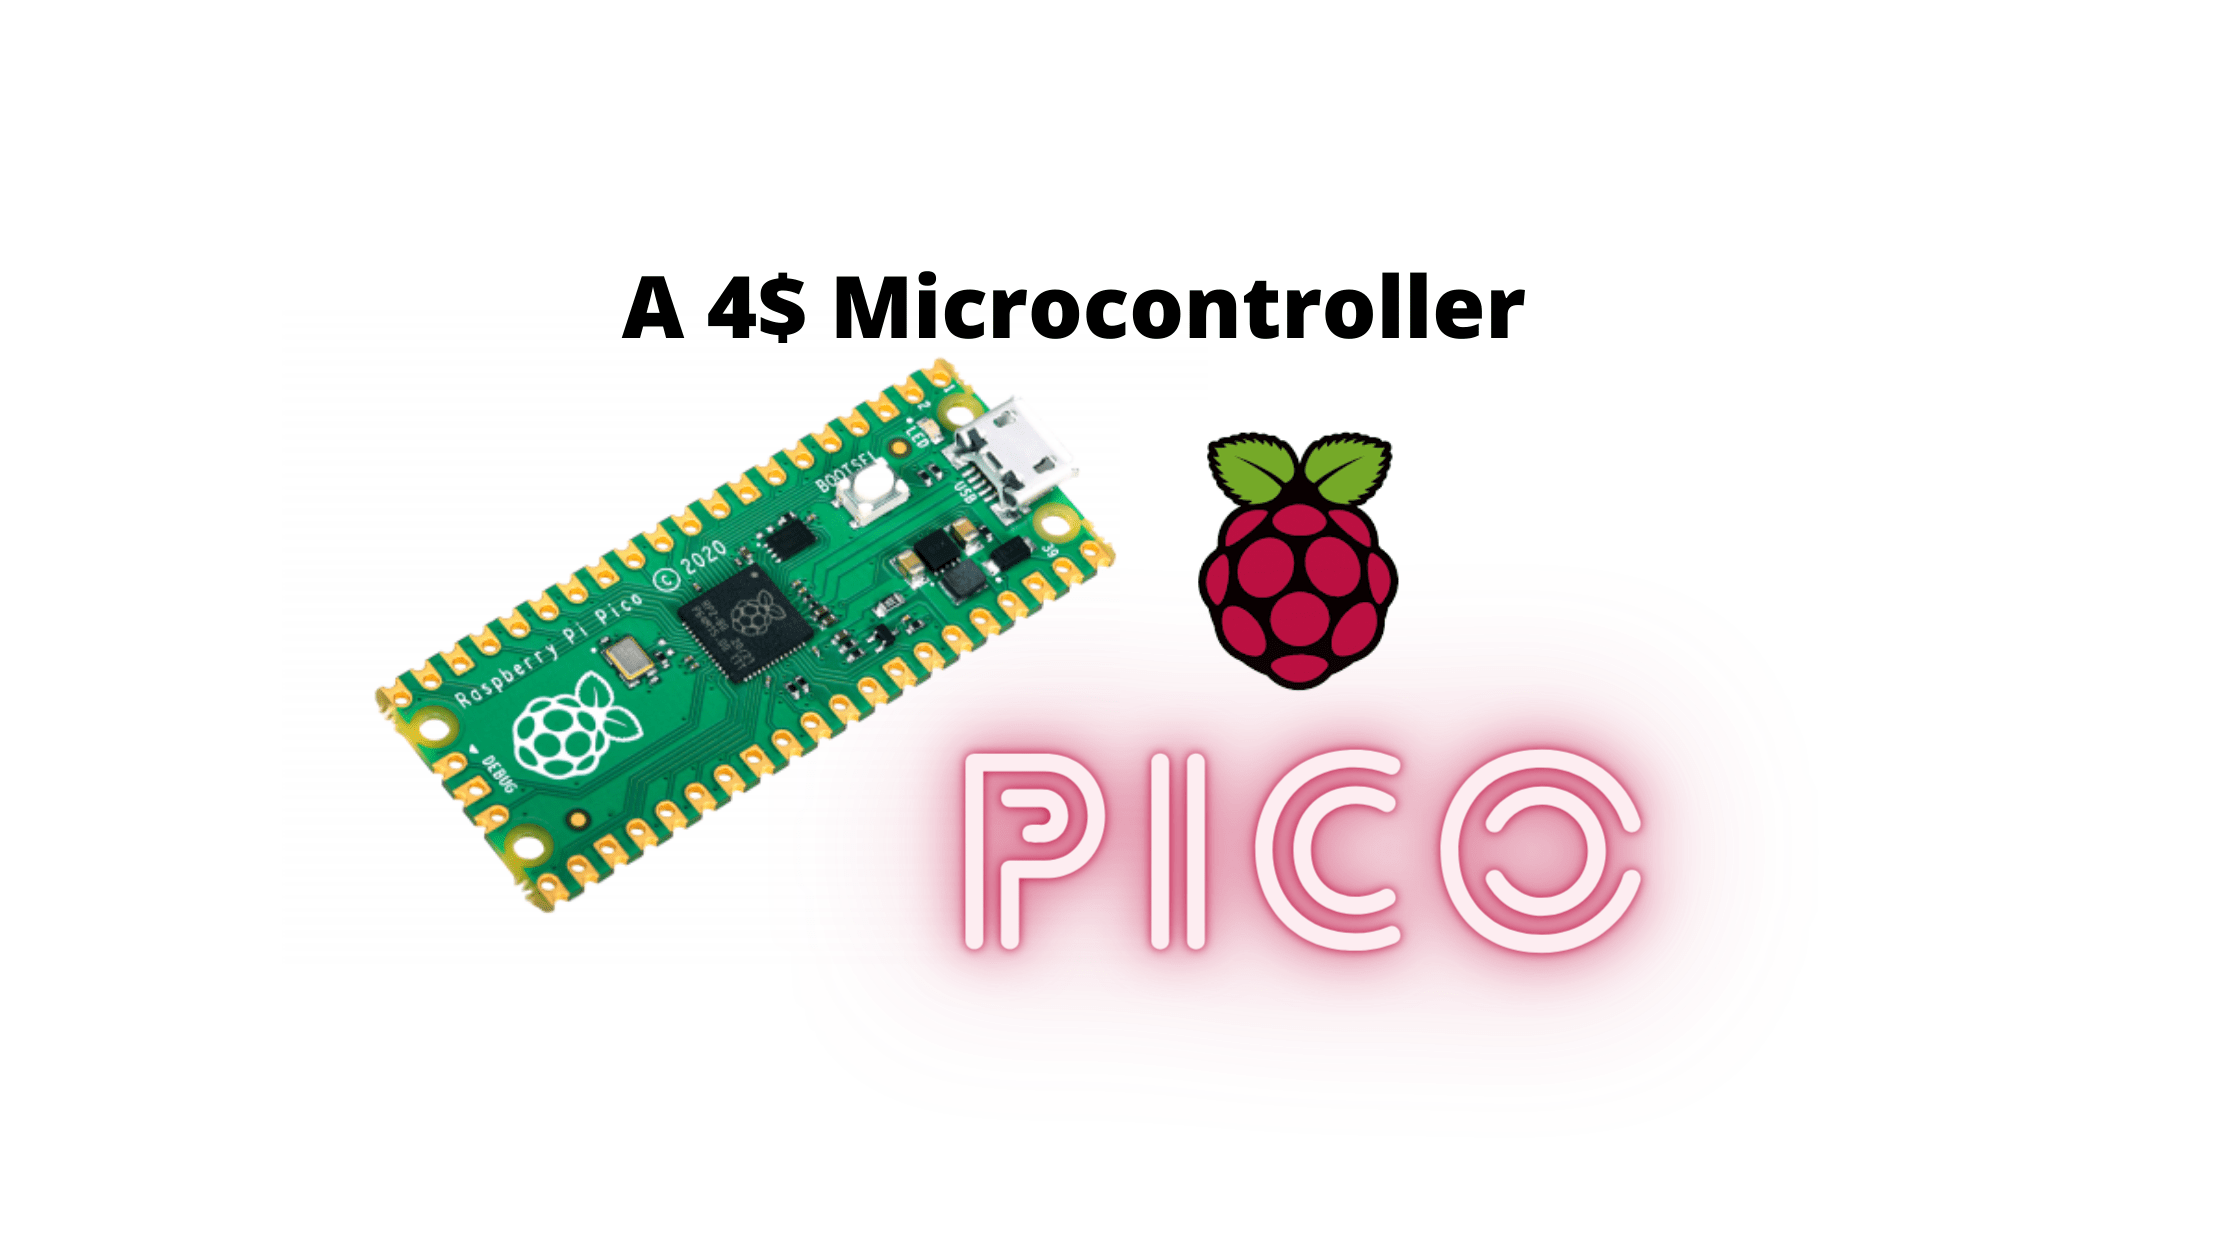 Raspberry Pi Pico 4$ Microcontroller